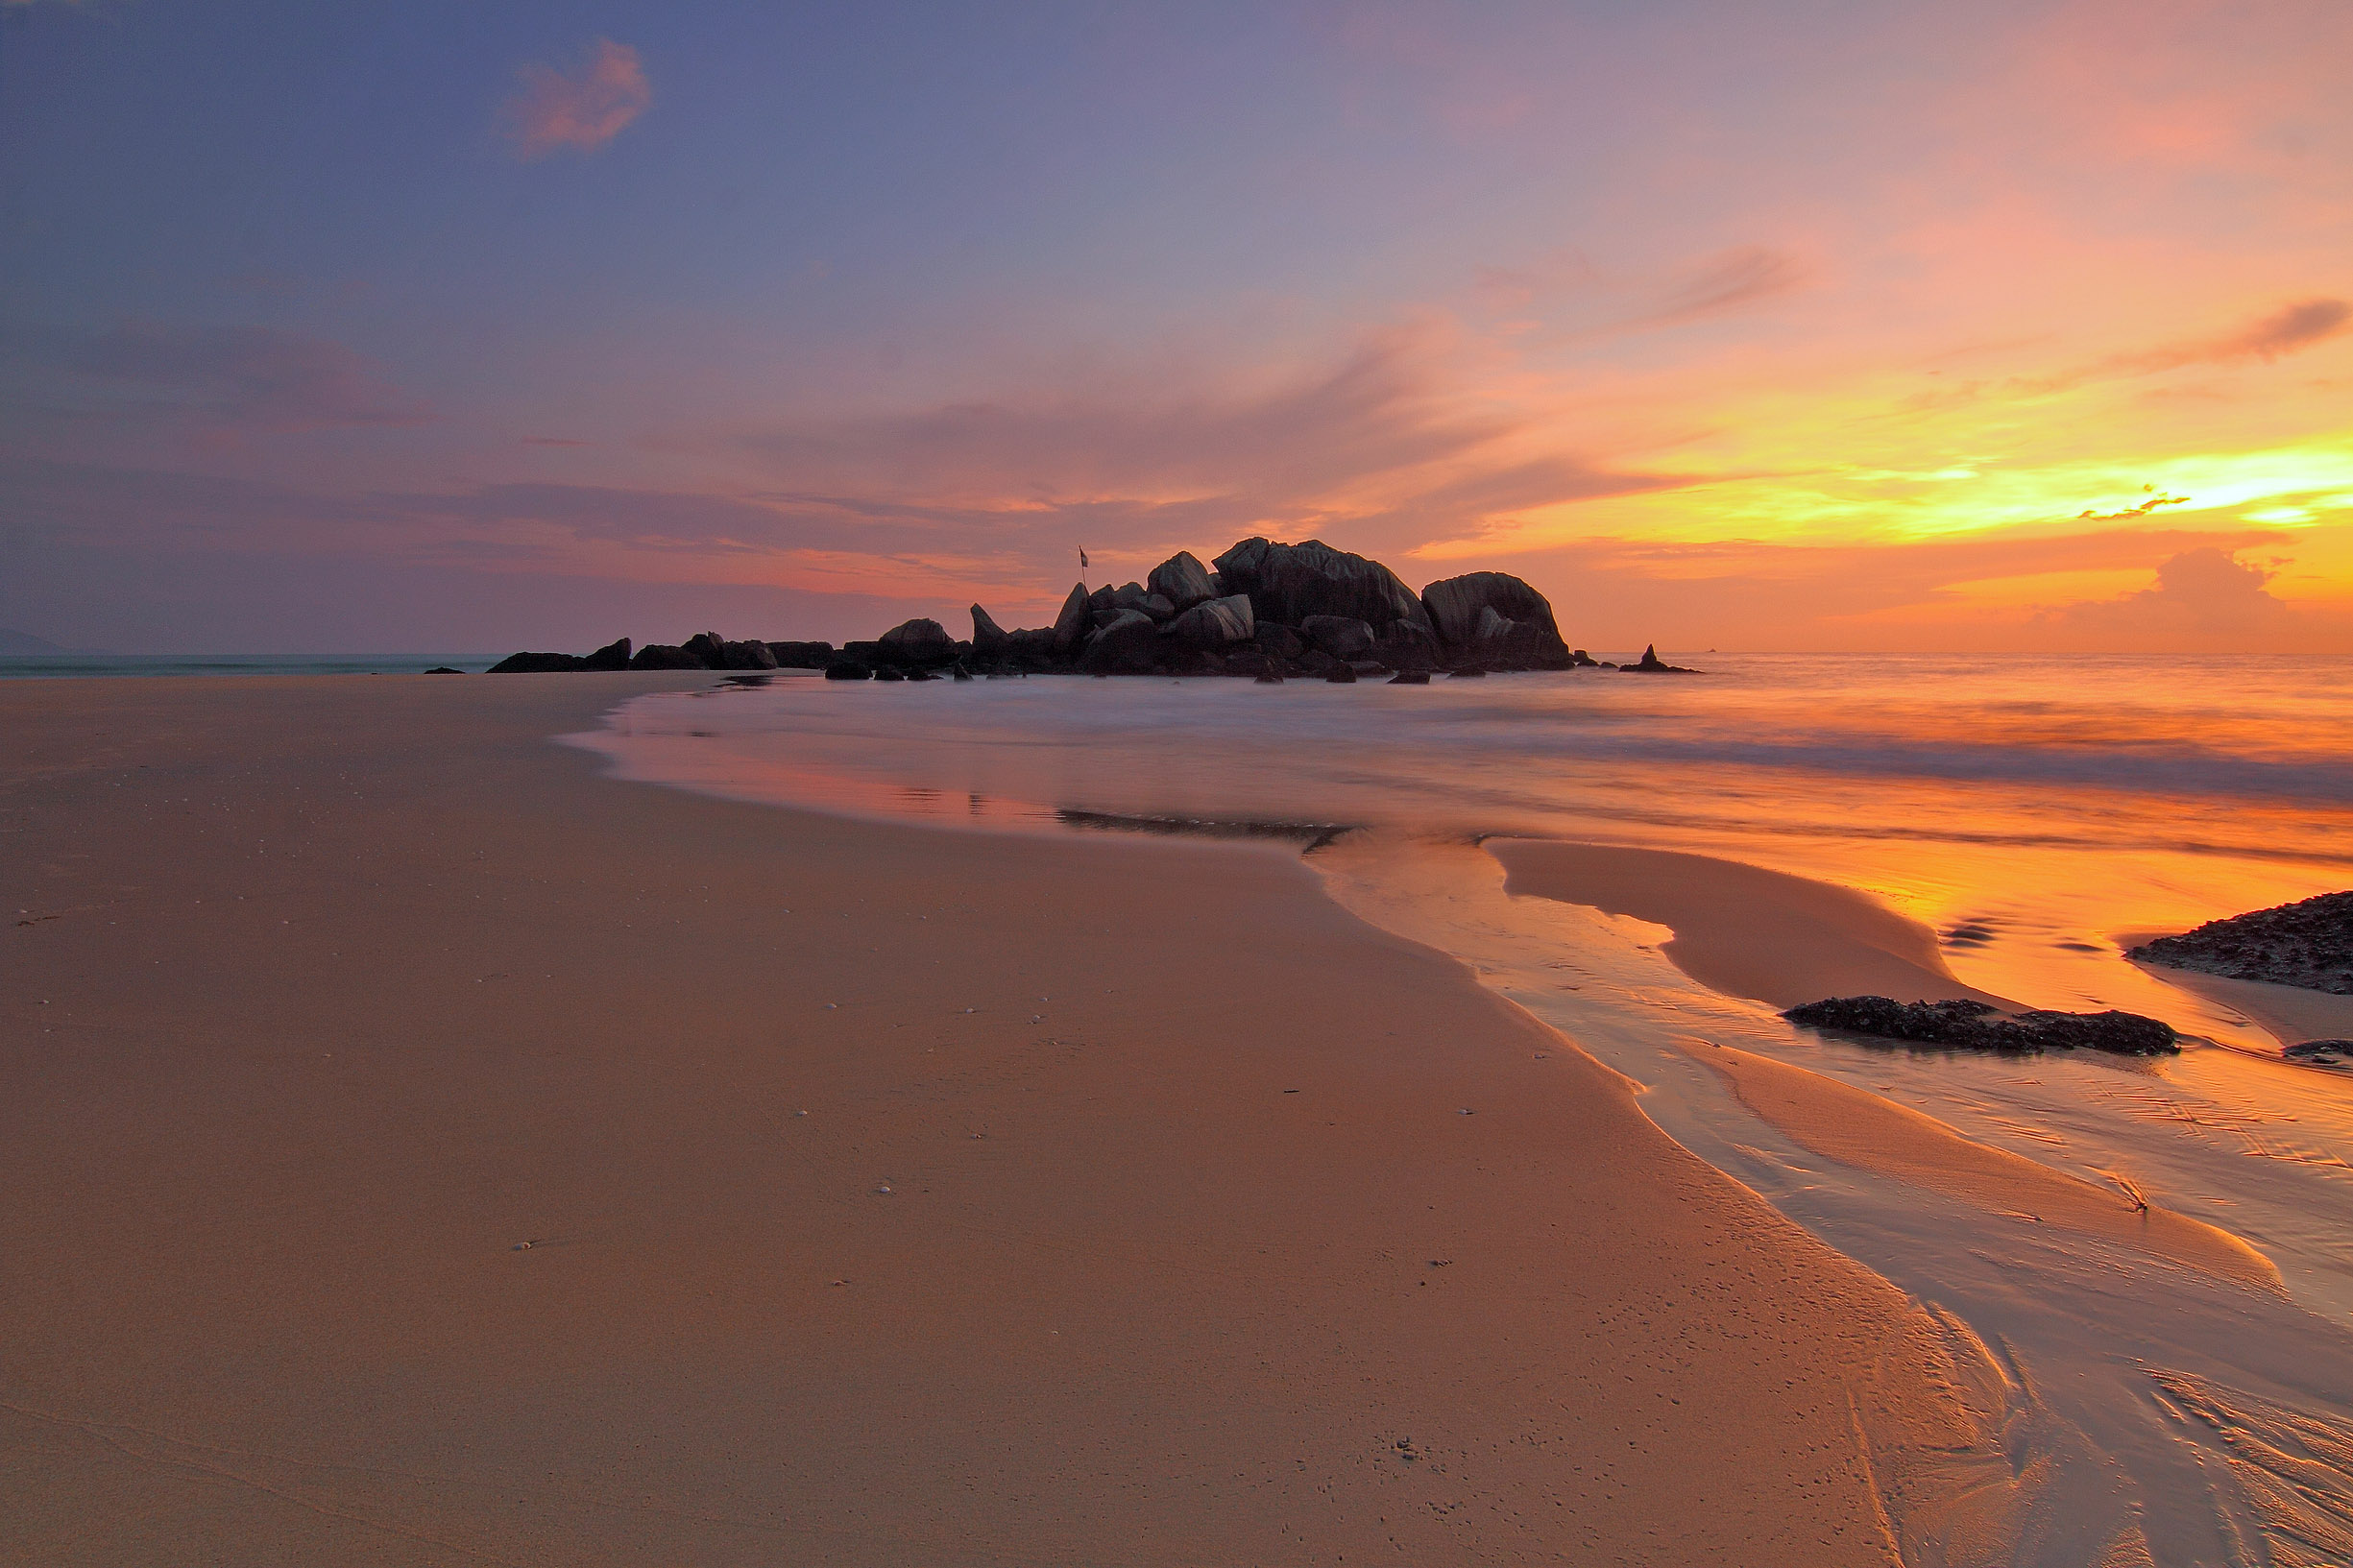 Sunset over the sandy beach image  Free stock photo  Public Domain photo  CC0 Images